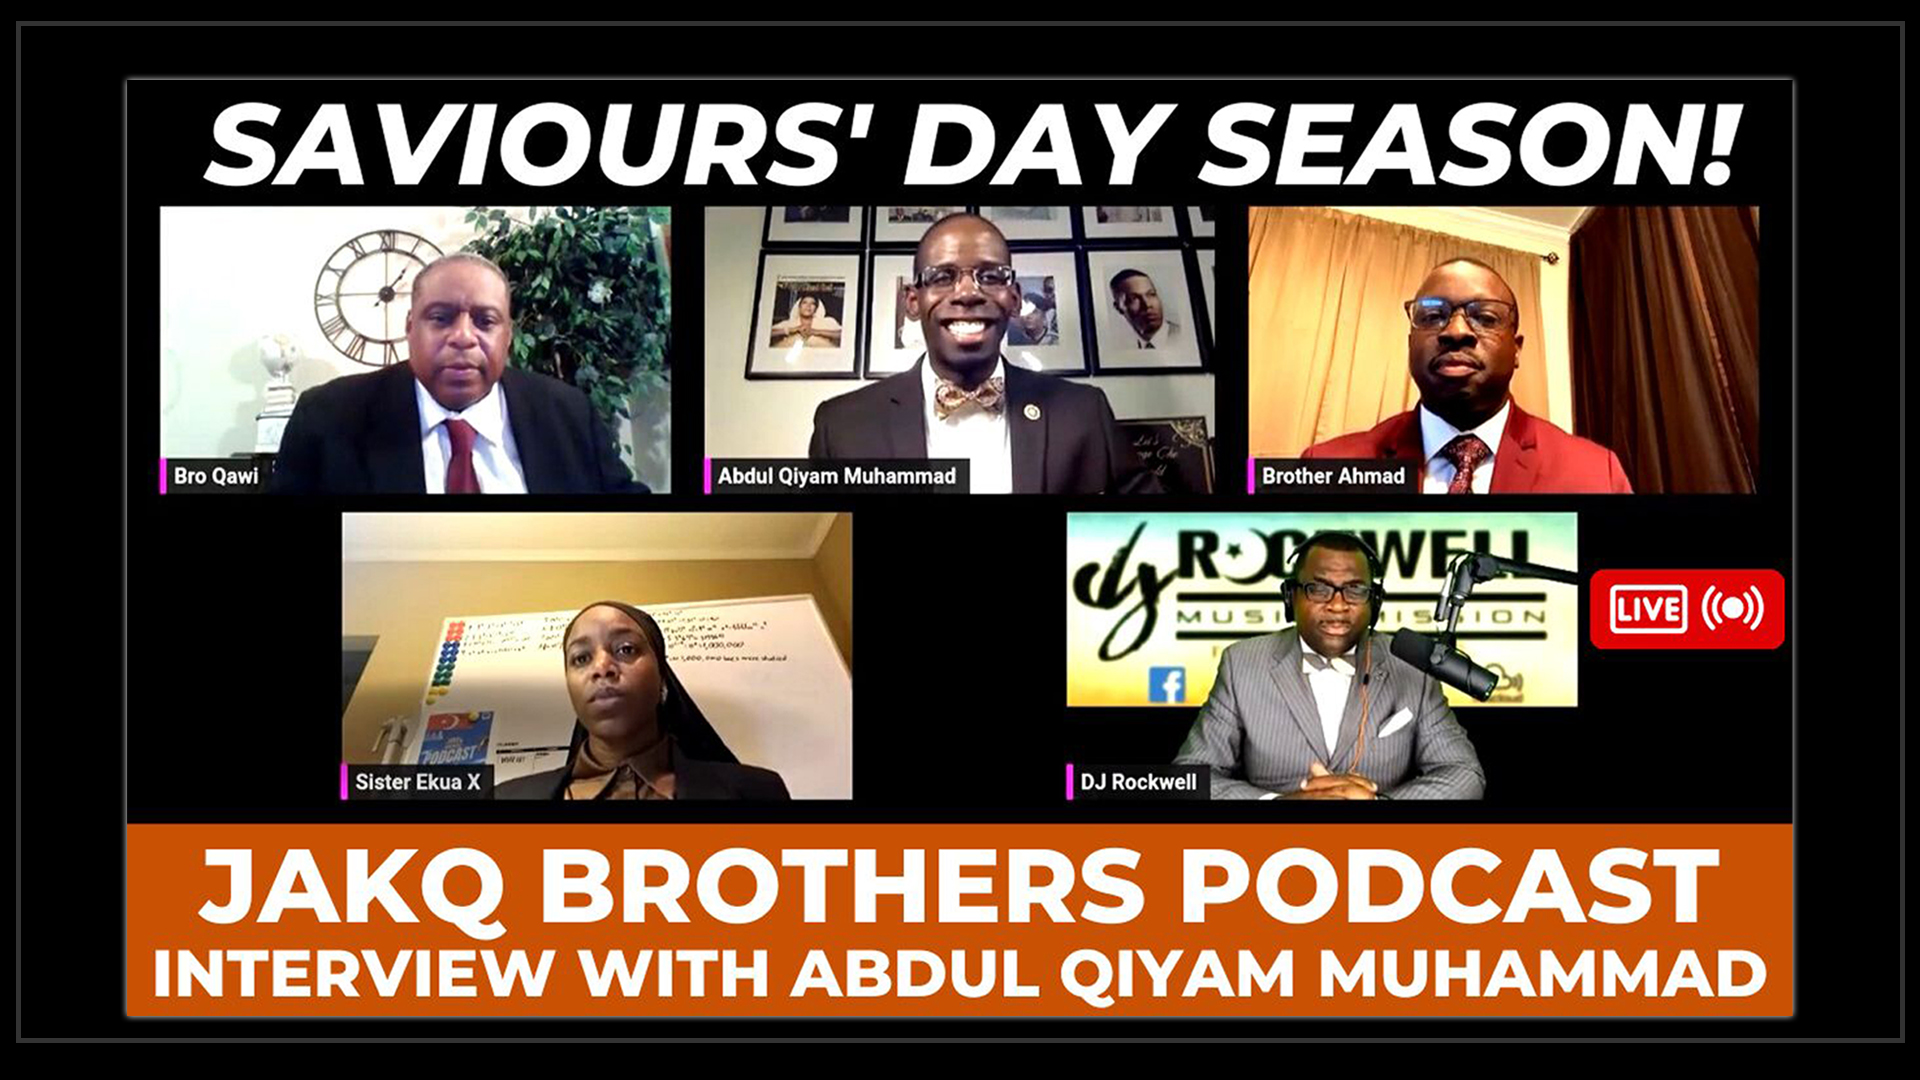 Saviours Day Season: Abdul Qiyam Muhammad on JAKQ Brothers Podcast